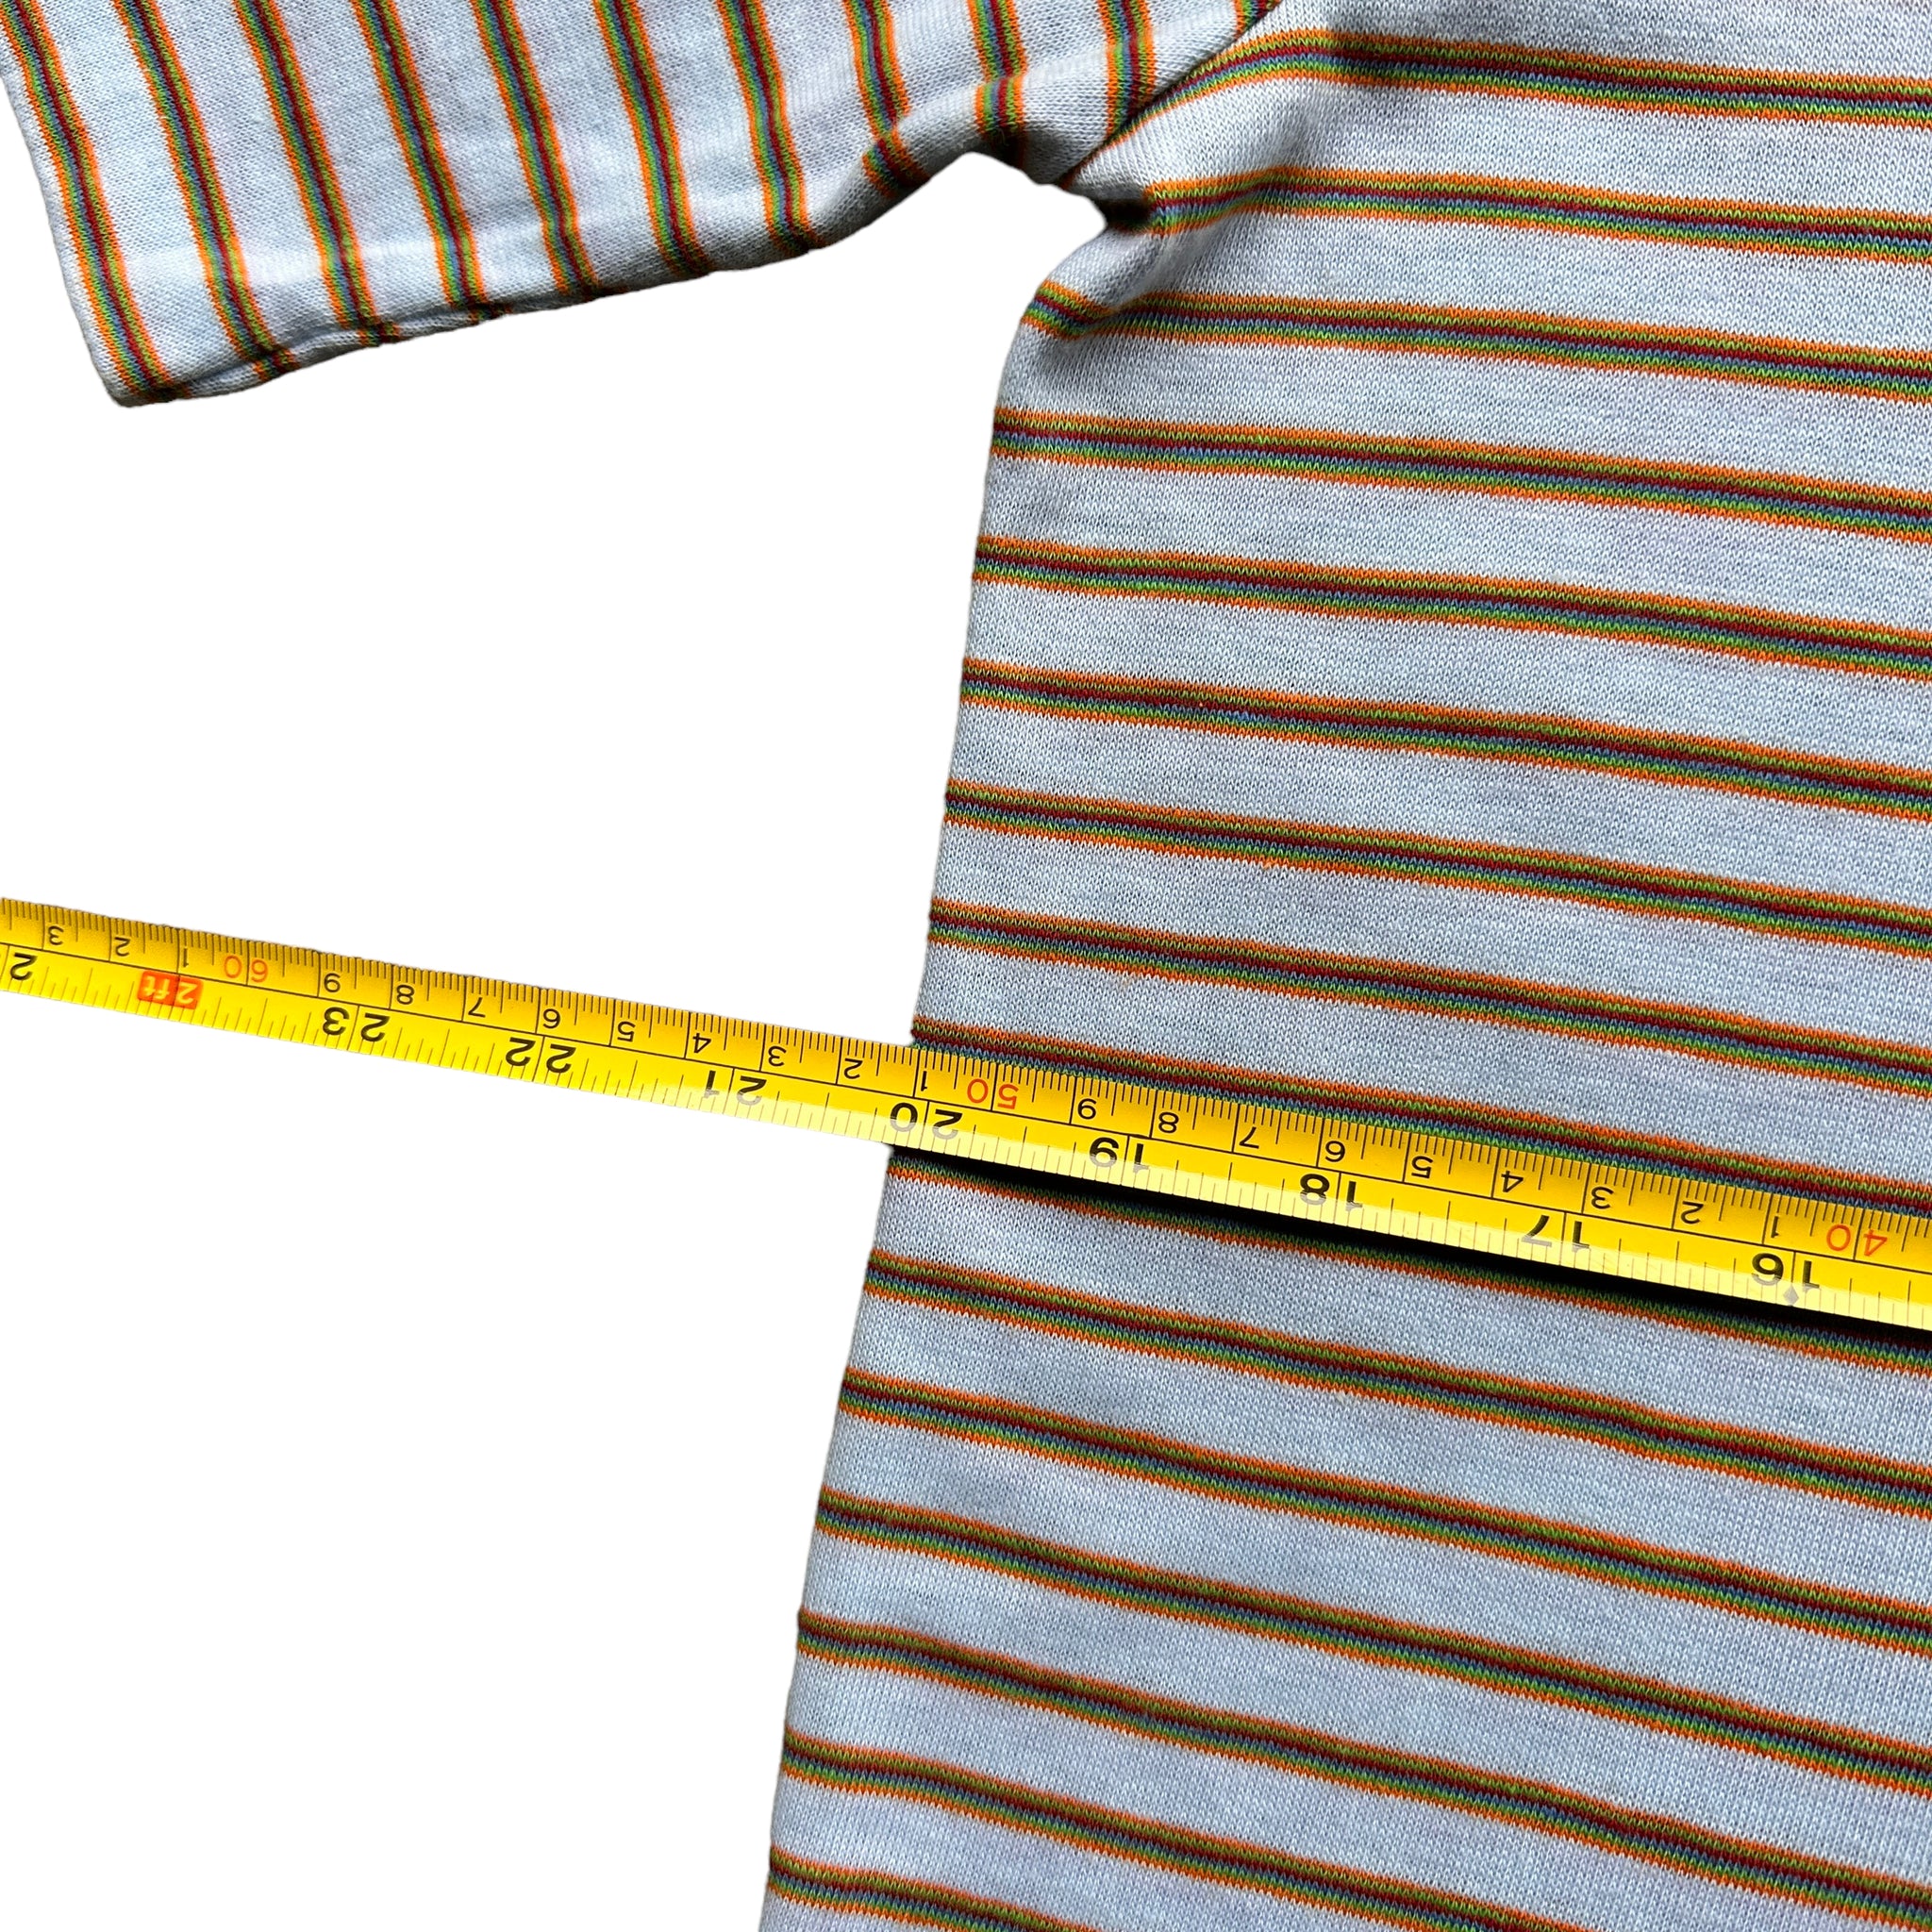 80s Striped polo shirt    medium